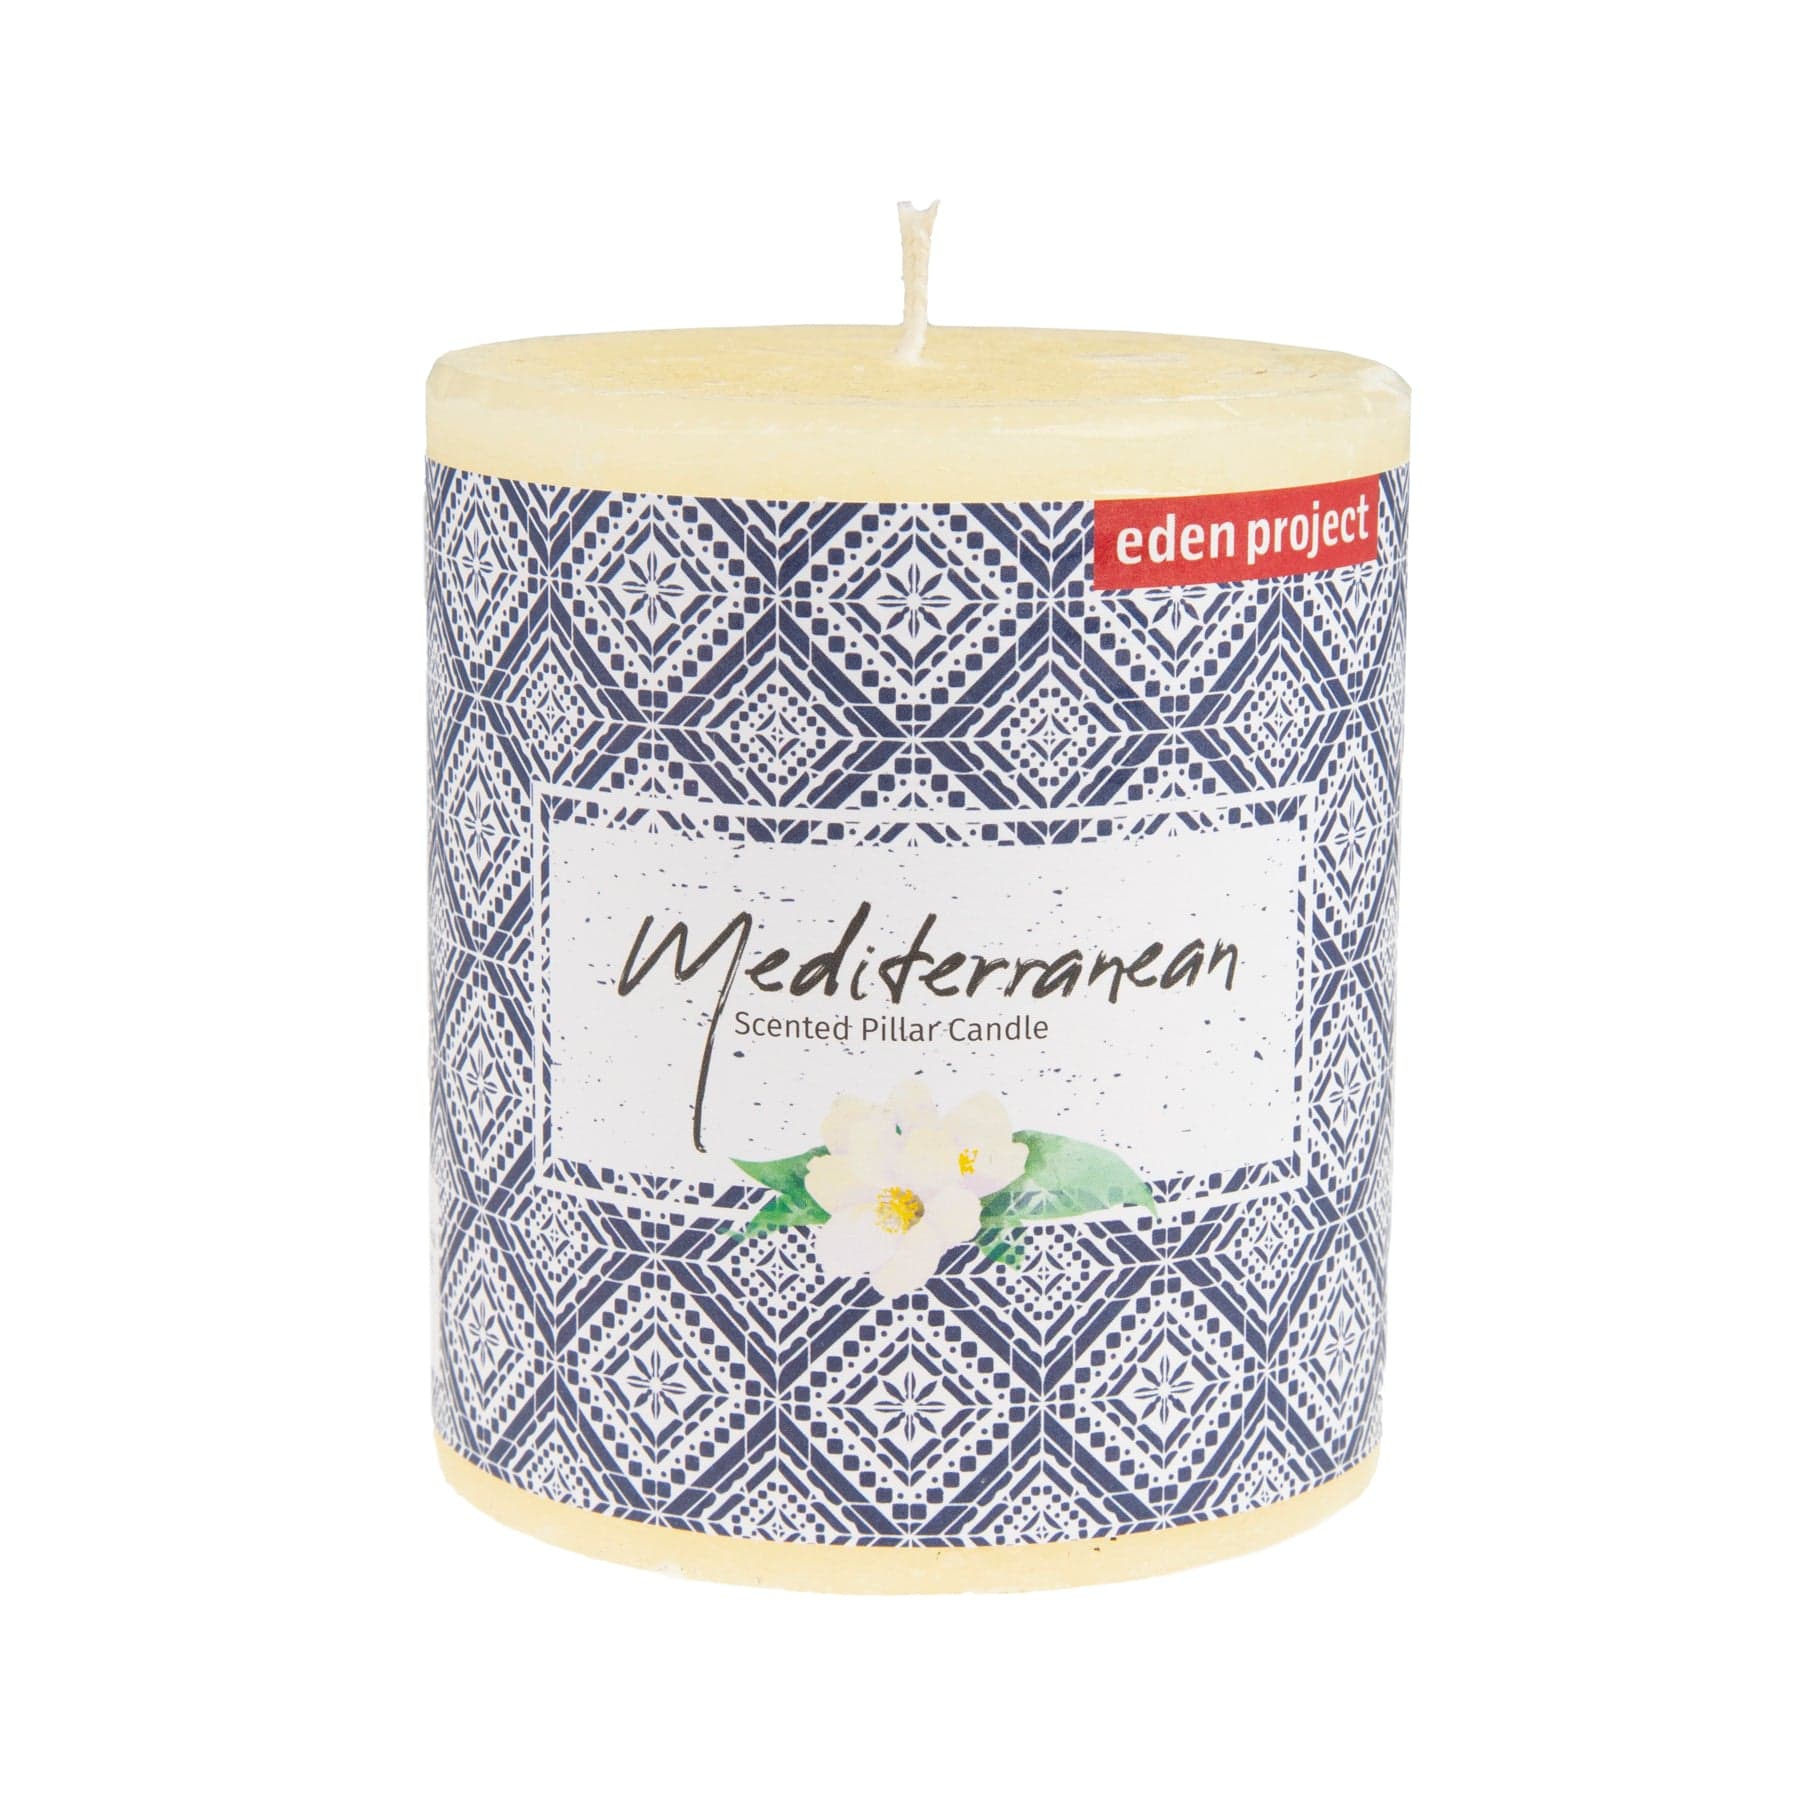 Mediterranean scented pillar candle